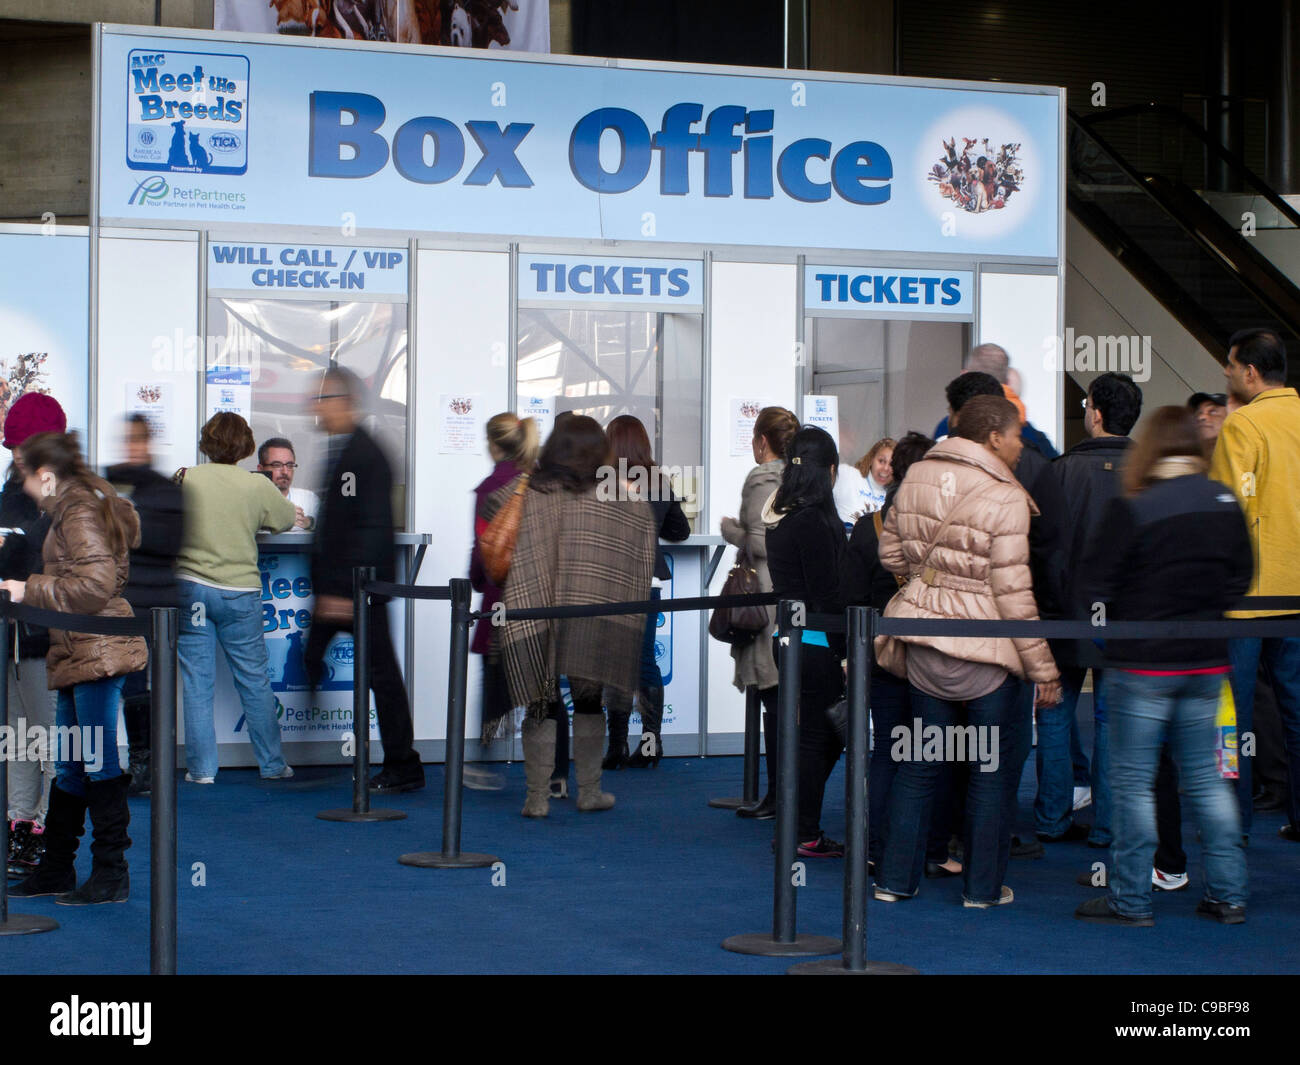 Box Office, JavitsCenter, Meet the Breeds Event, 2011 Stock Photo